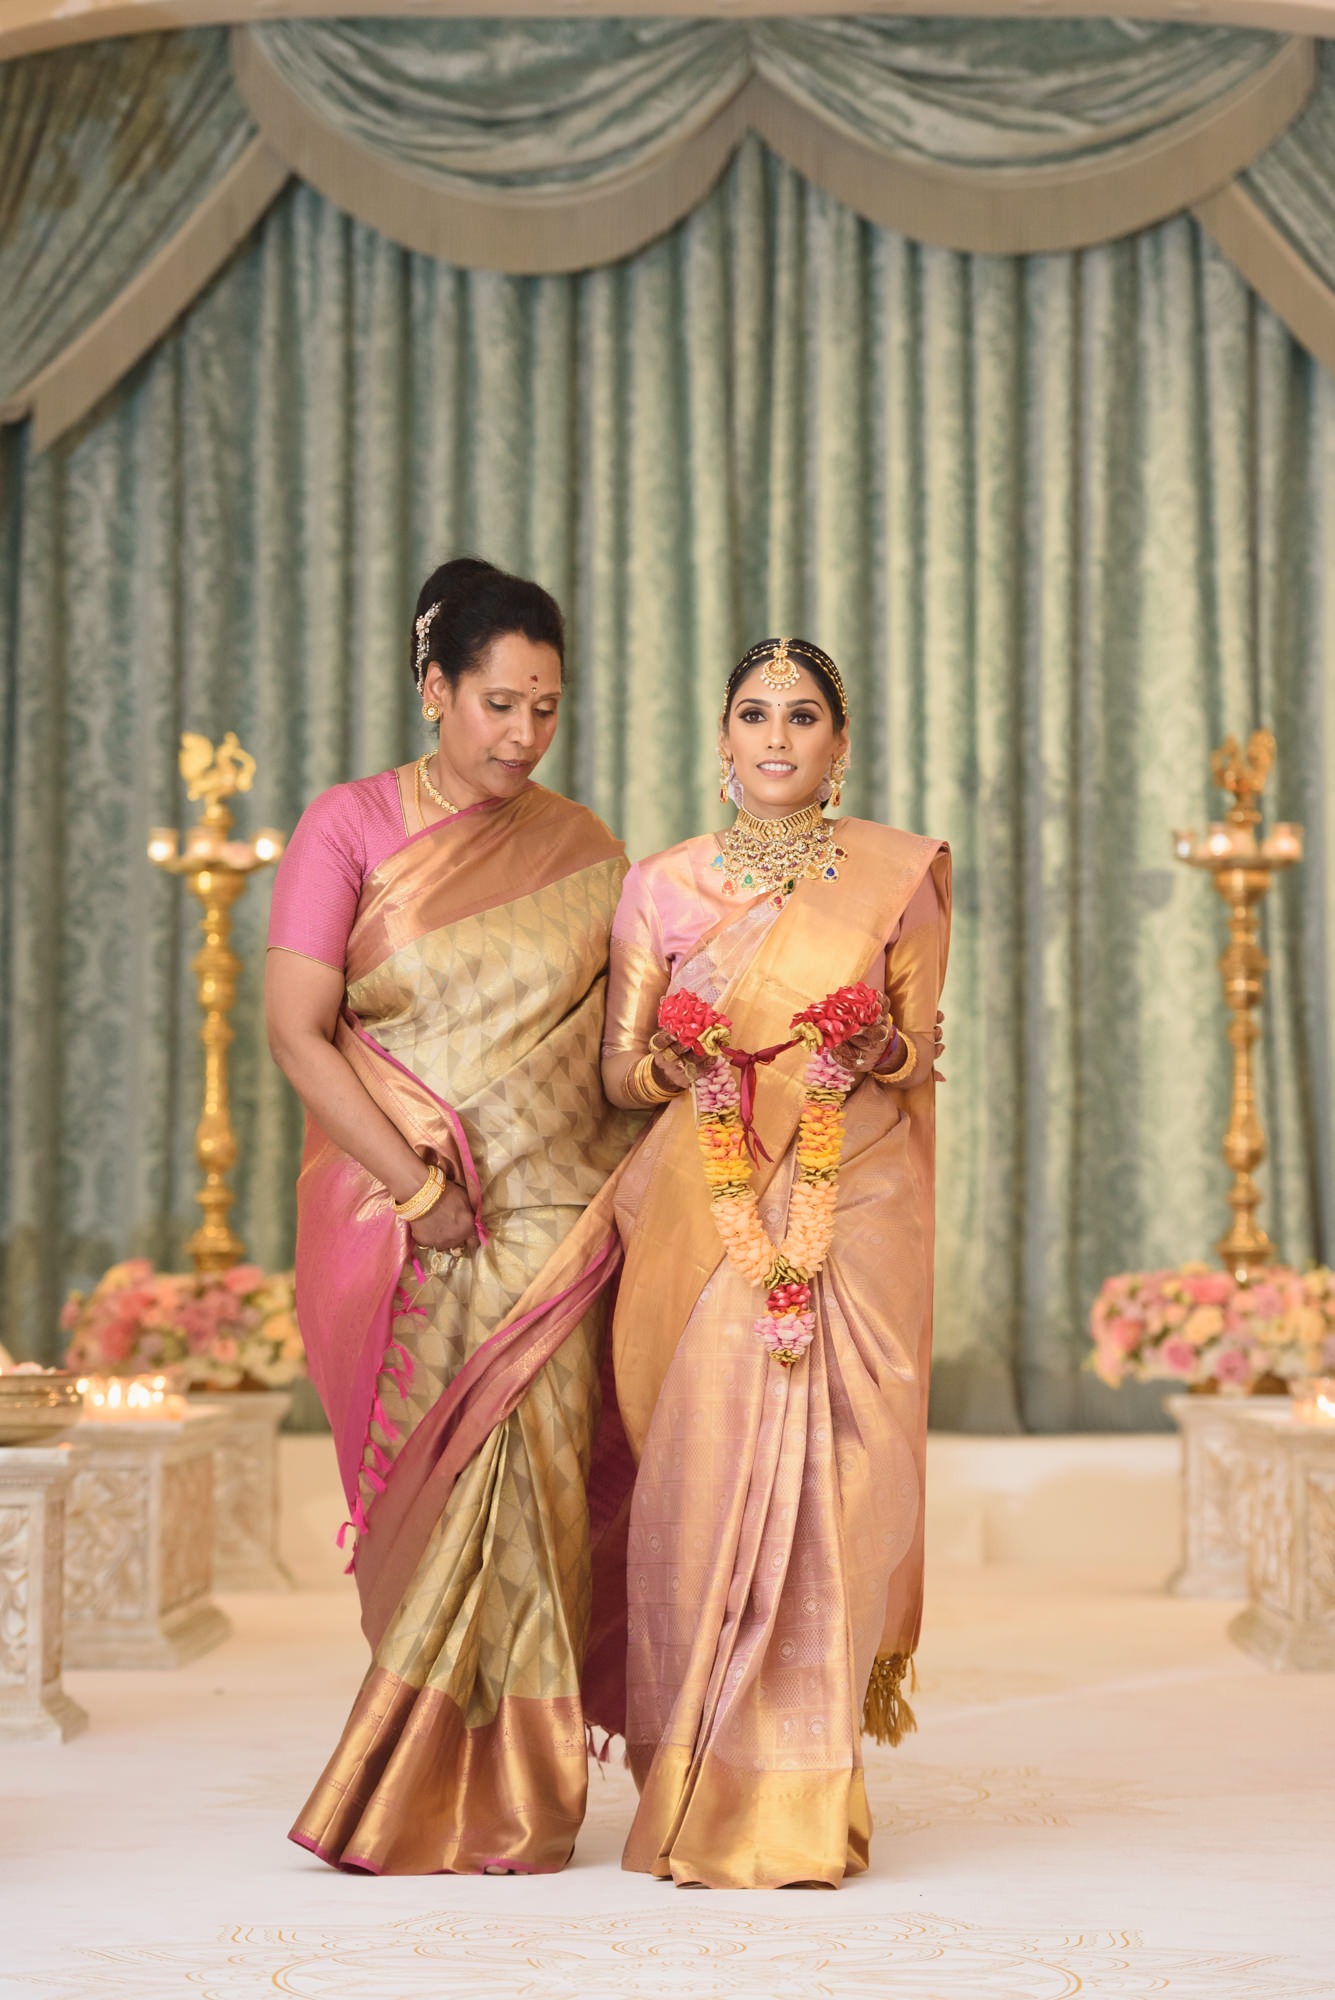 Tamil Gujrati hindu wedding photography photographer london the savoy -53.jpg